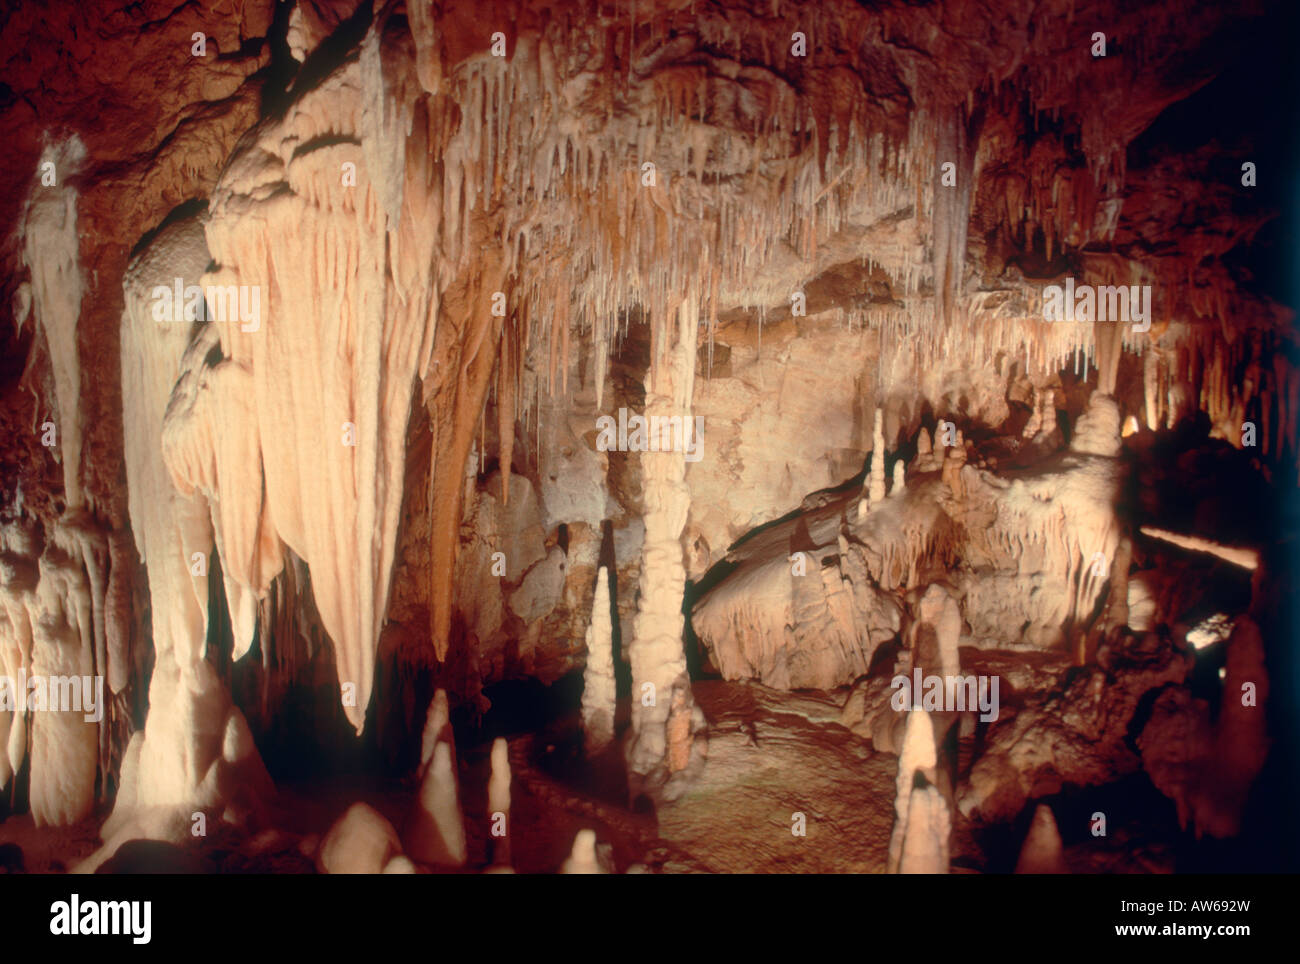 Inside Cavern with stalactites and stalagmites. France Stock Photo